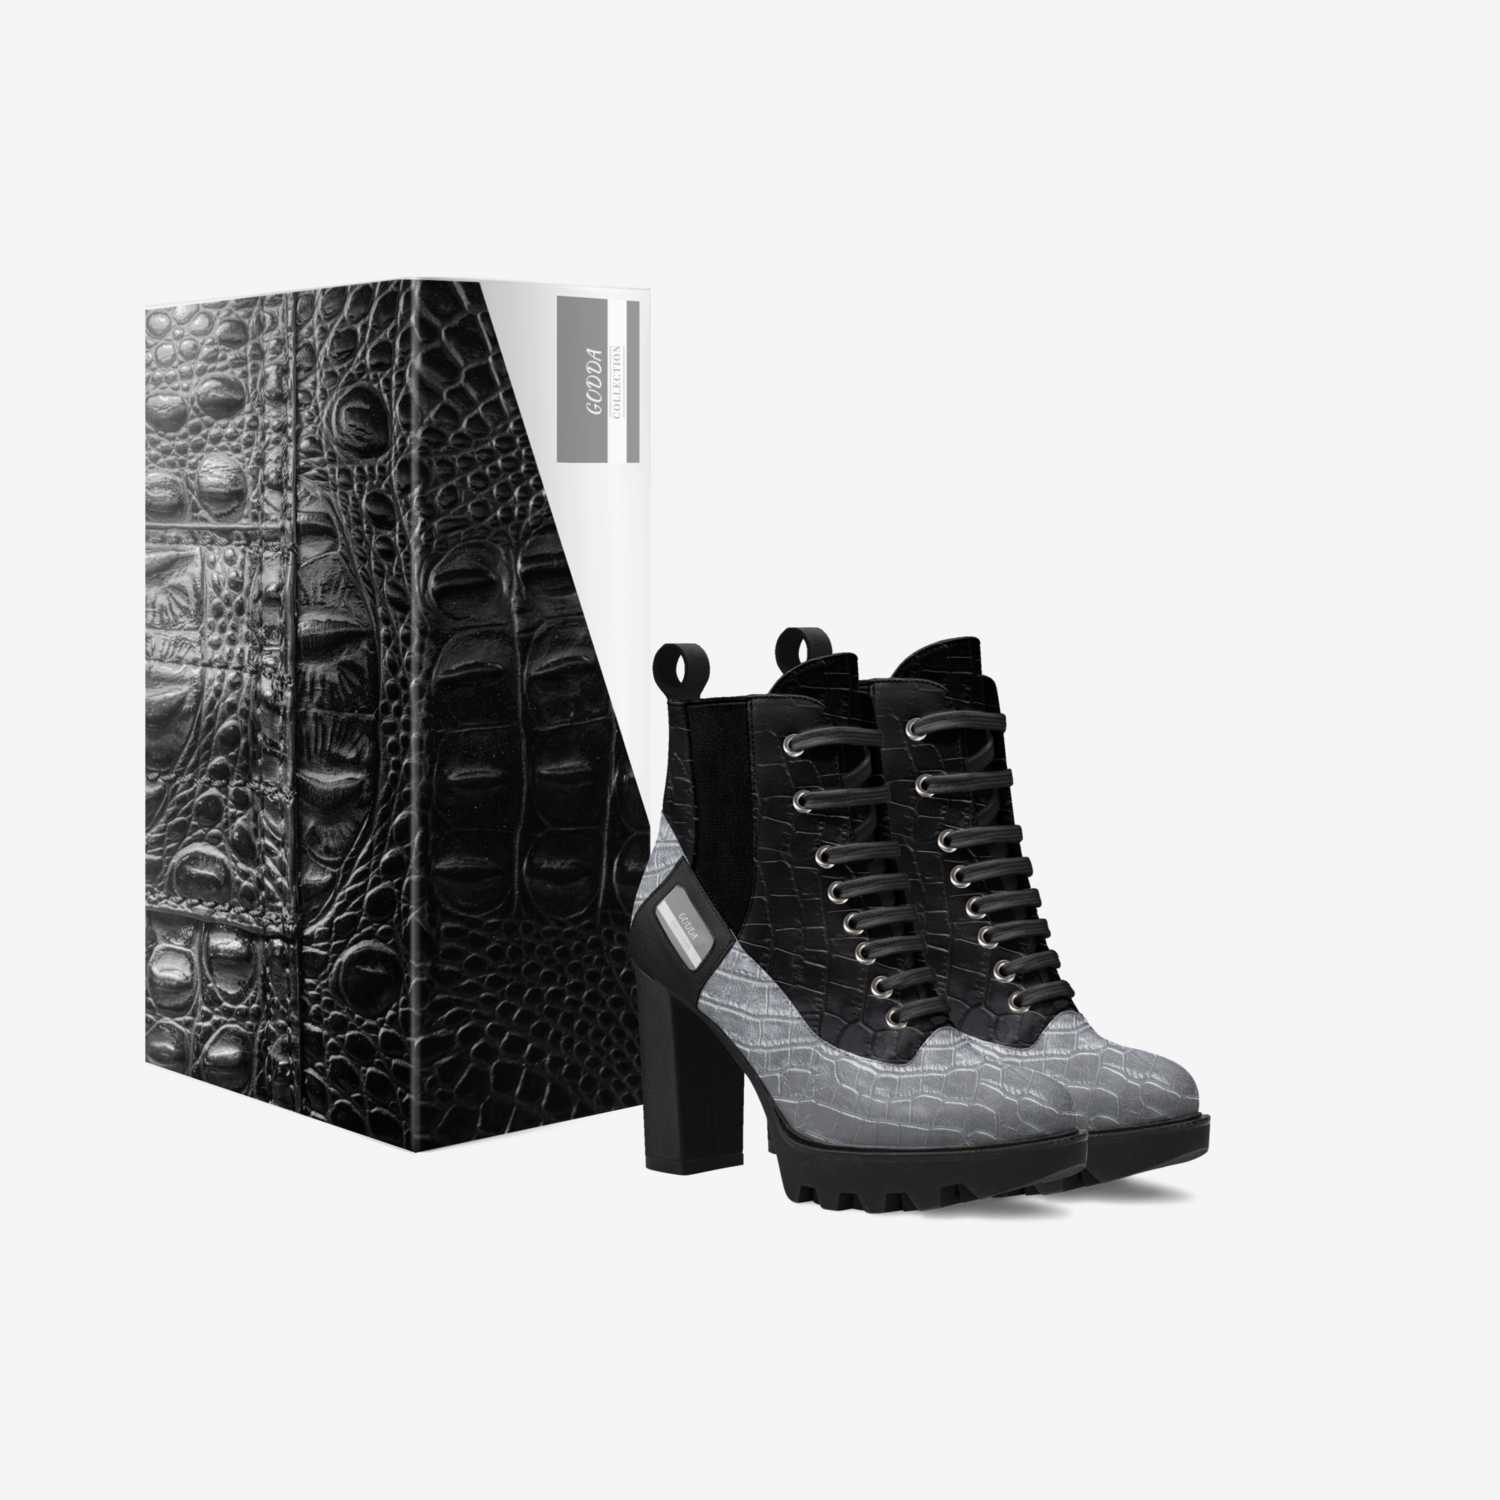 GODDA  custom made in Italy shoes by Sabrina Nesmith | Box view